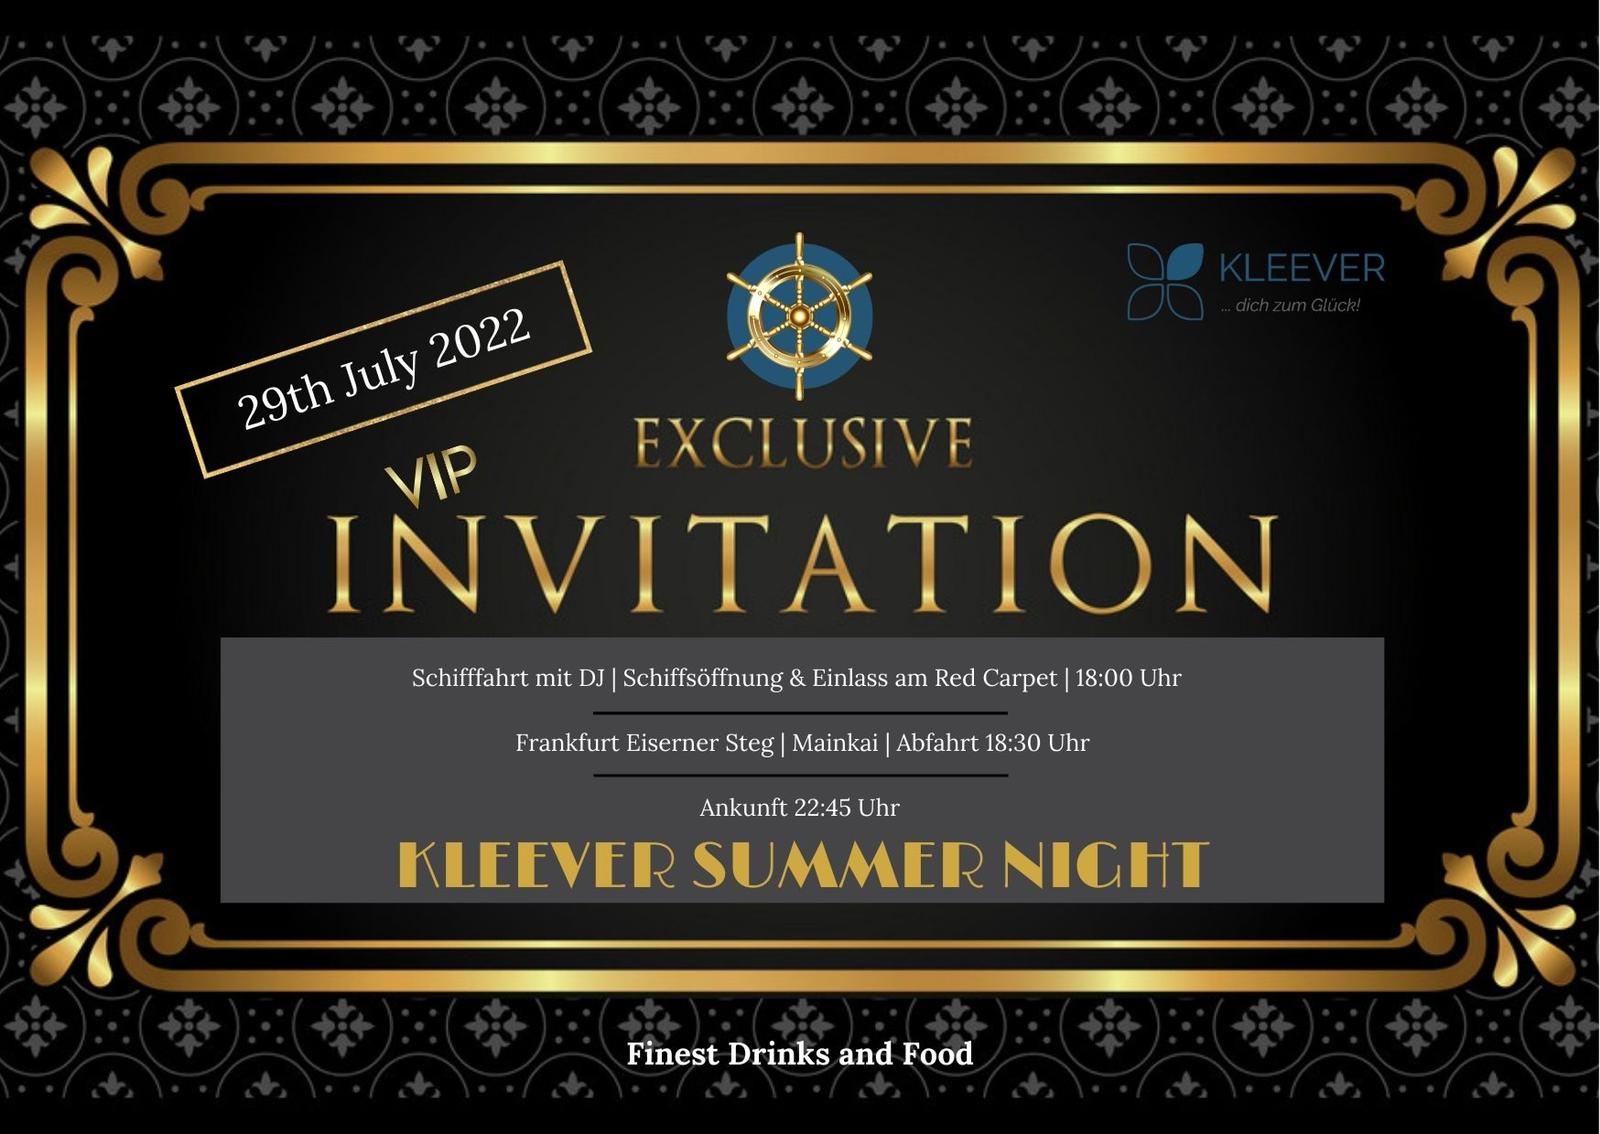 Kleever Summer Night, Exclusive VIP Einladung